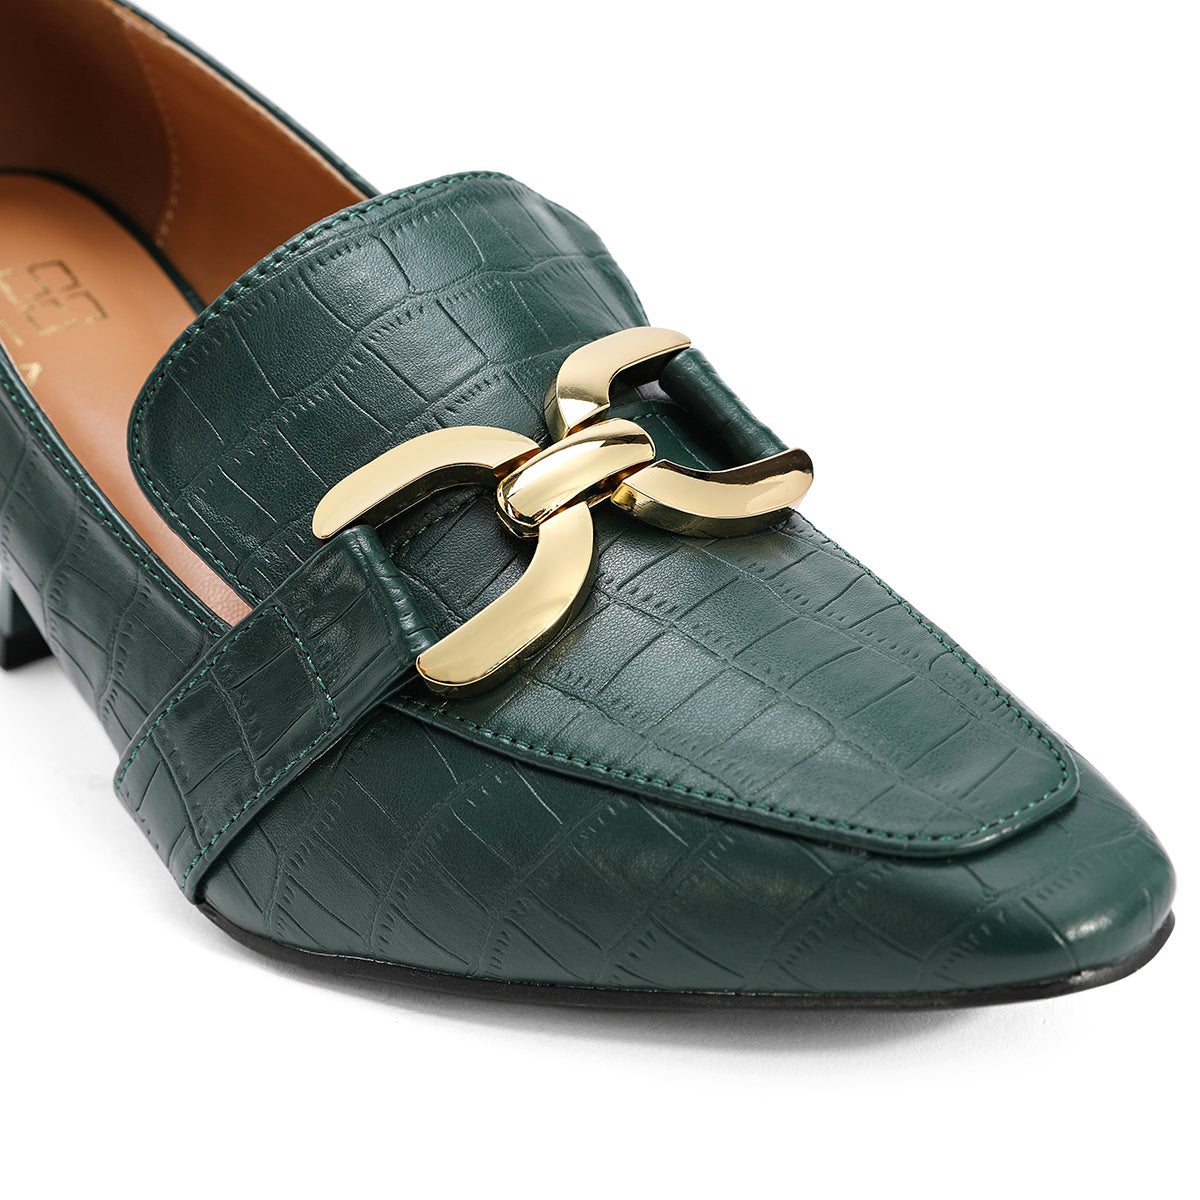 Elegant women's shoes with a medium high heel, green